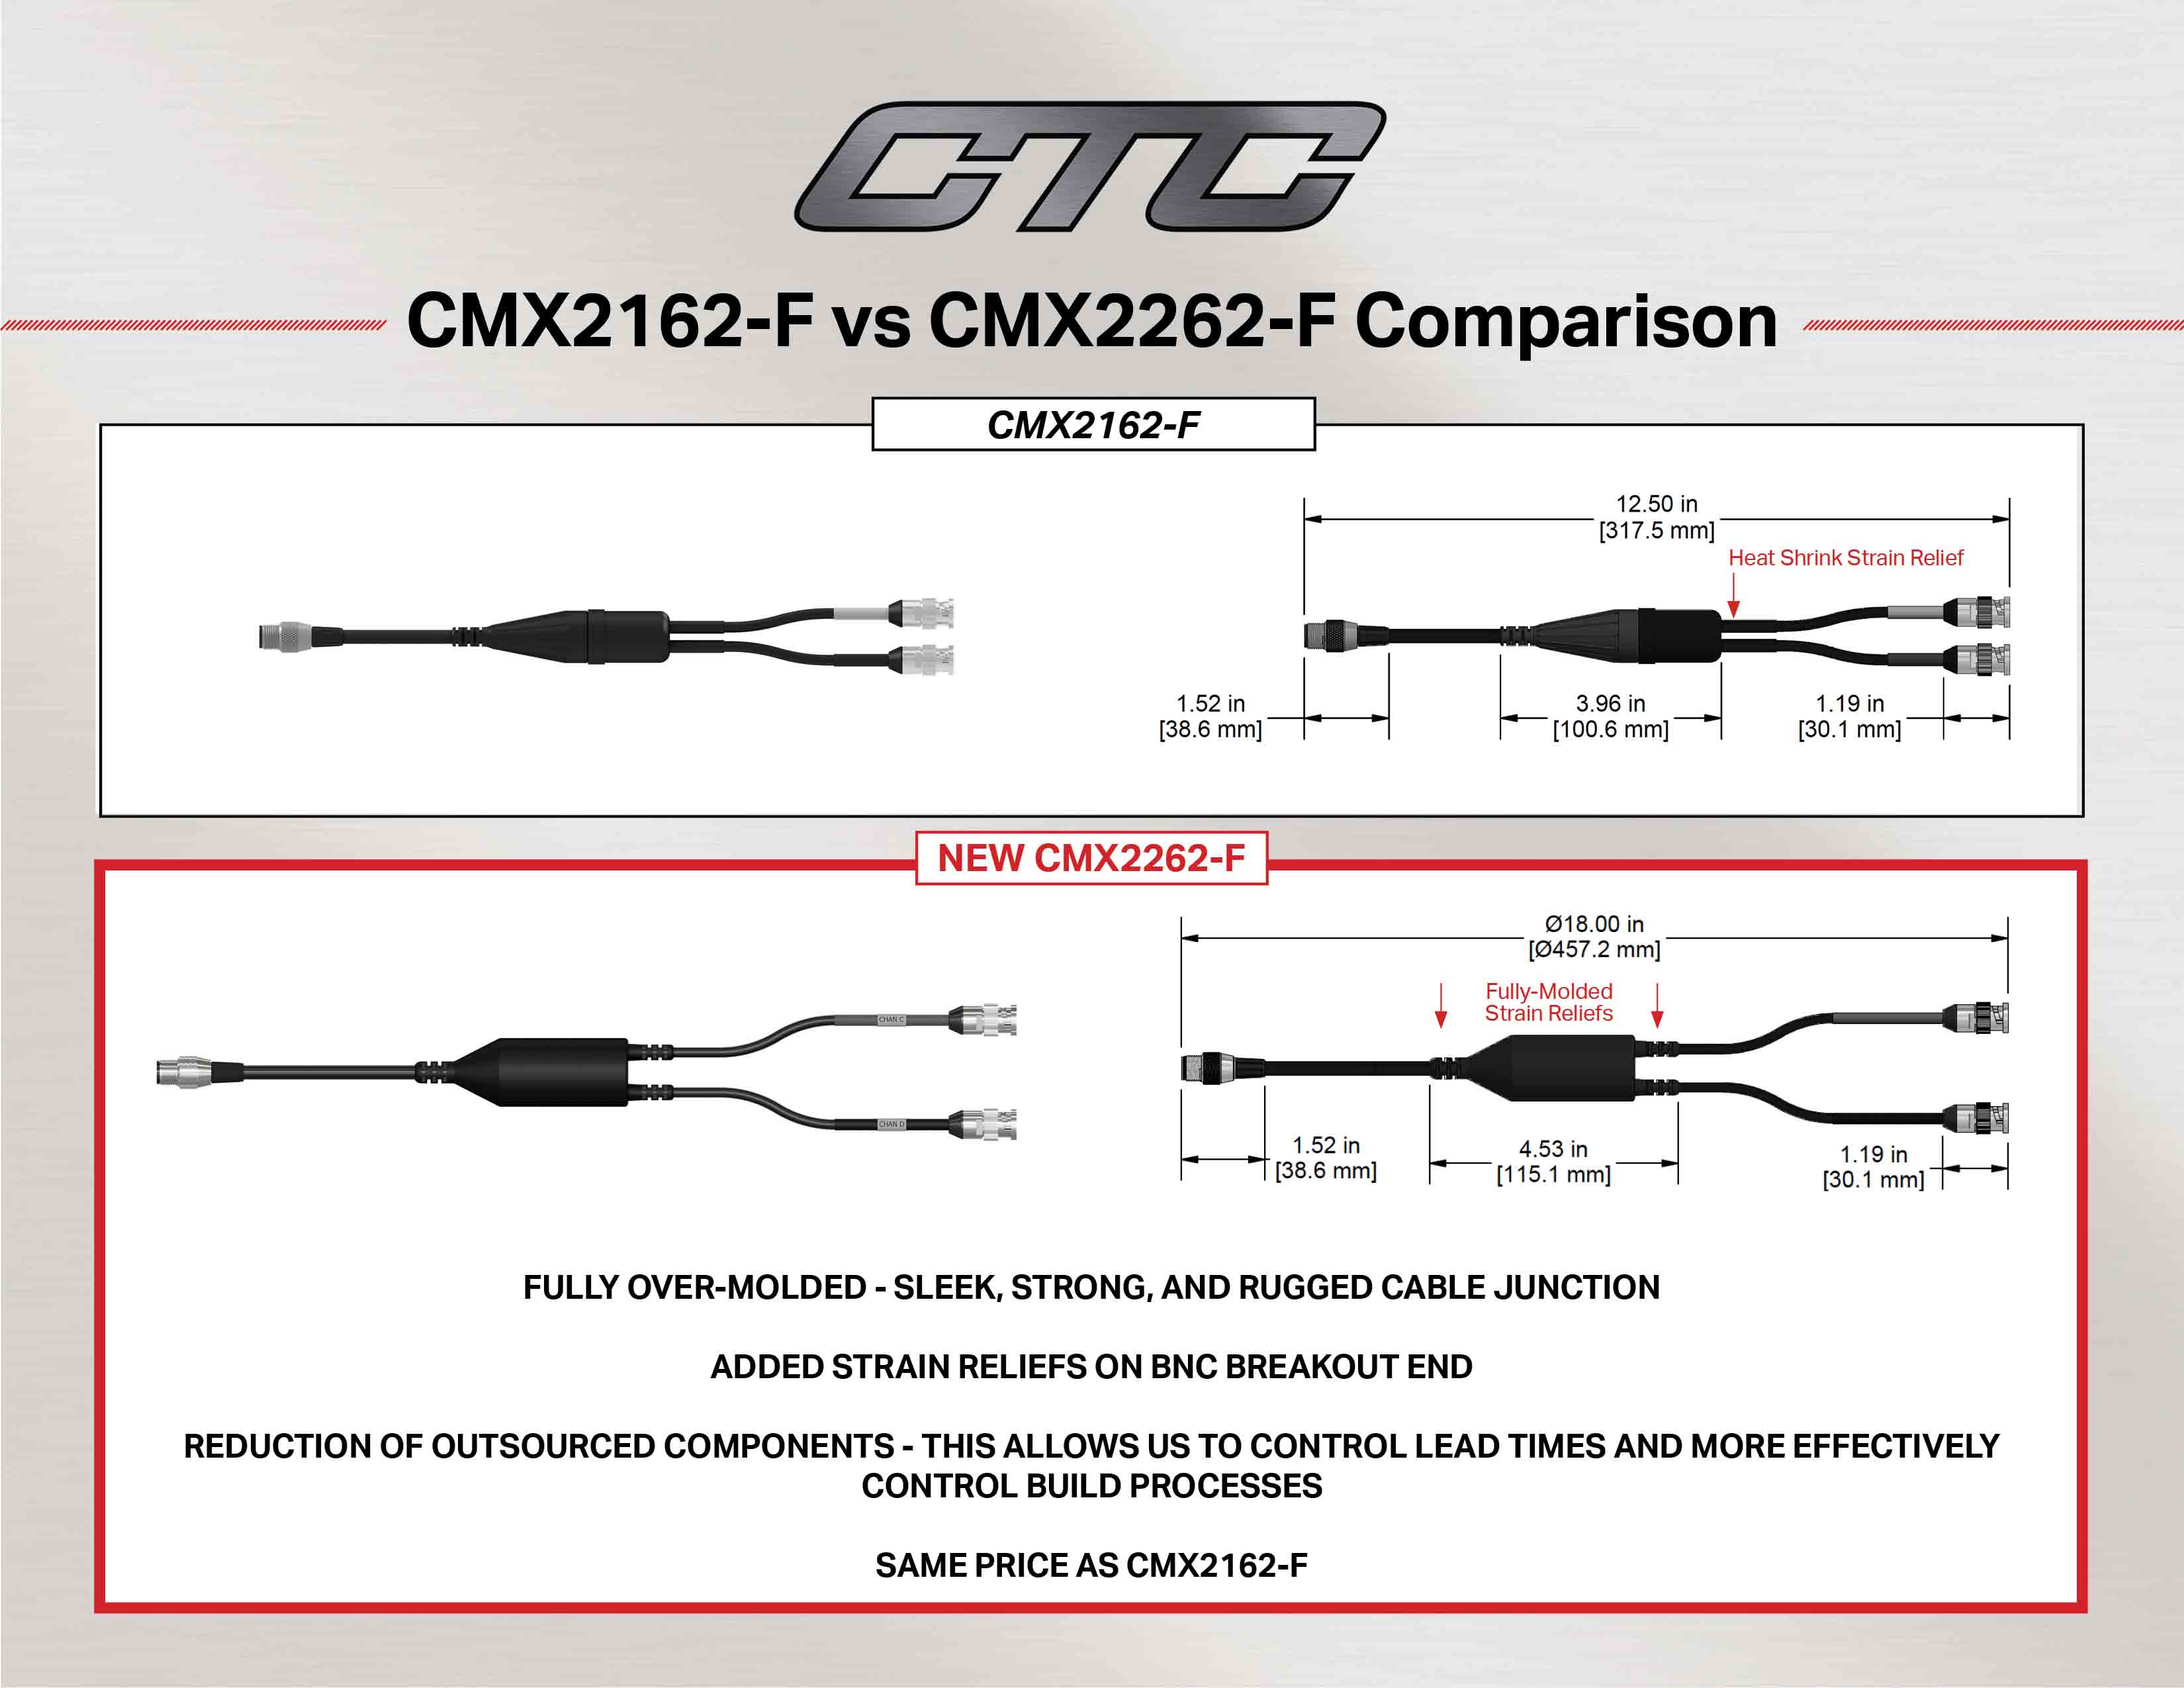 CMX2162-F vs CMX2262-F cable comparison diagram and measurements